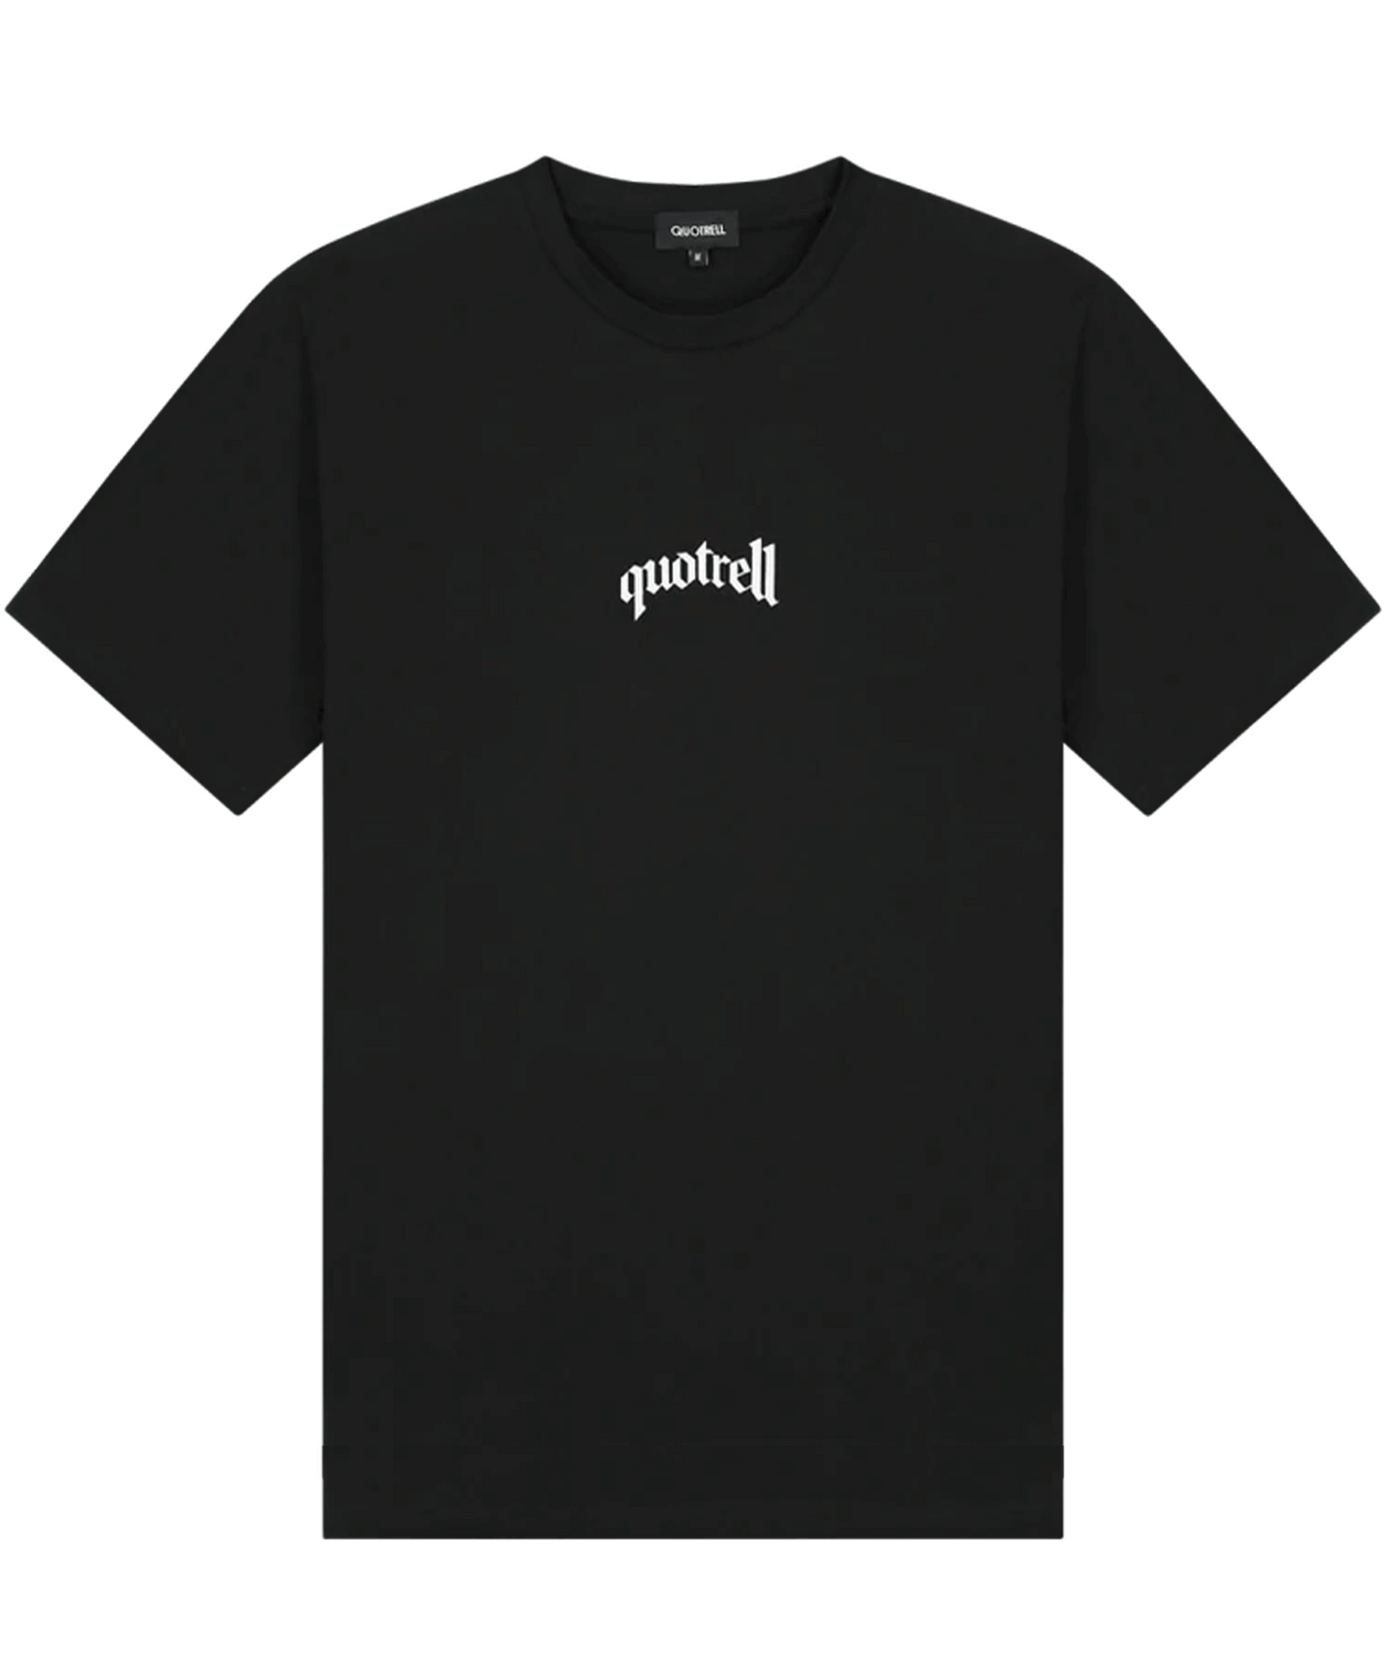 Quotrell - Global Unity - T-shirt - Black/white